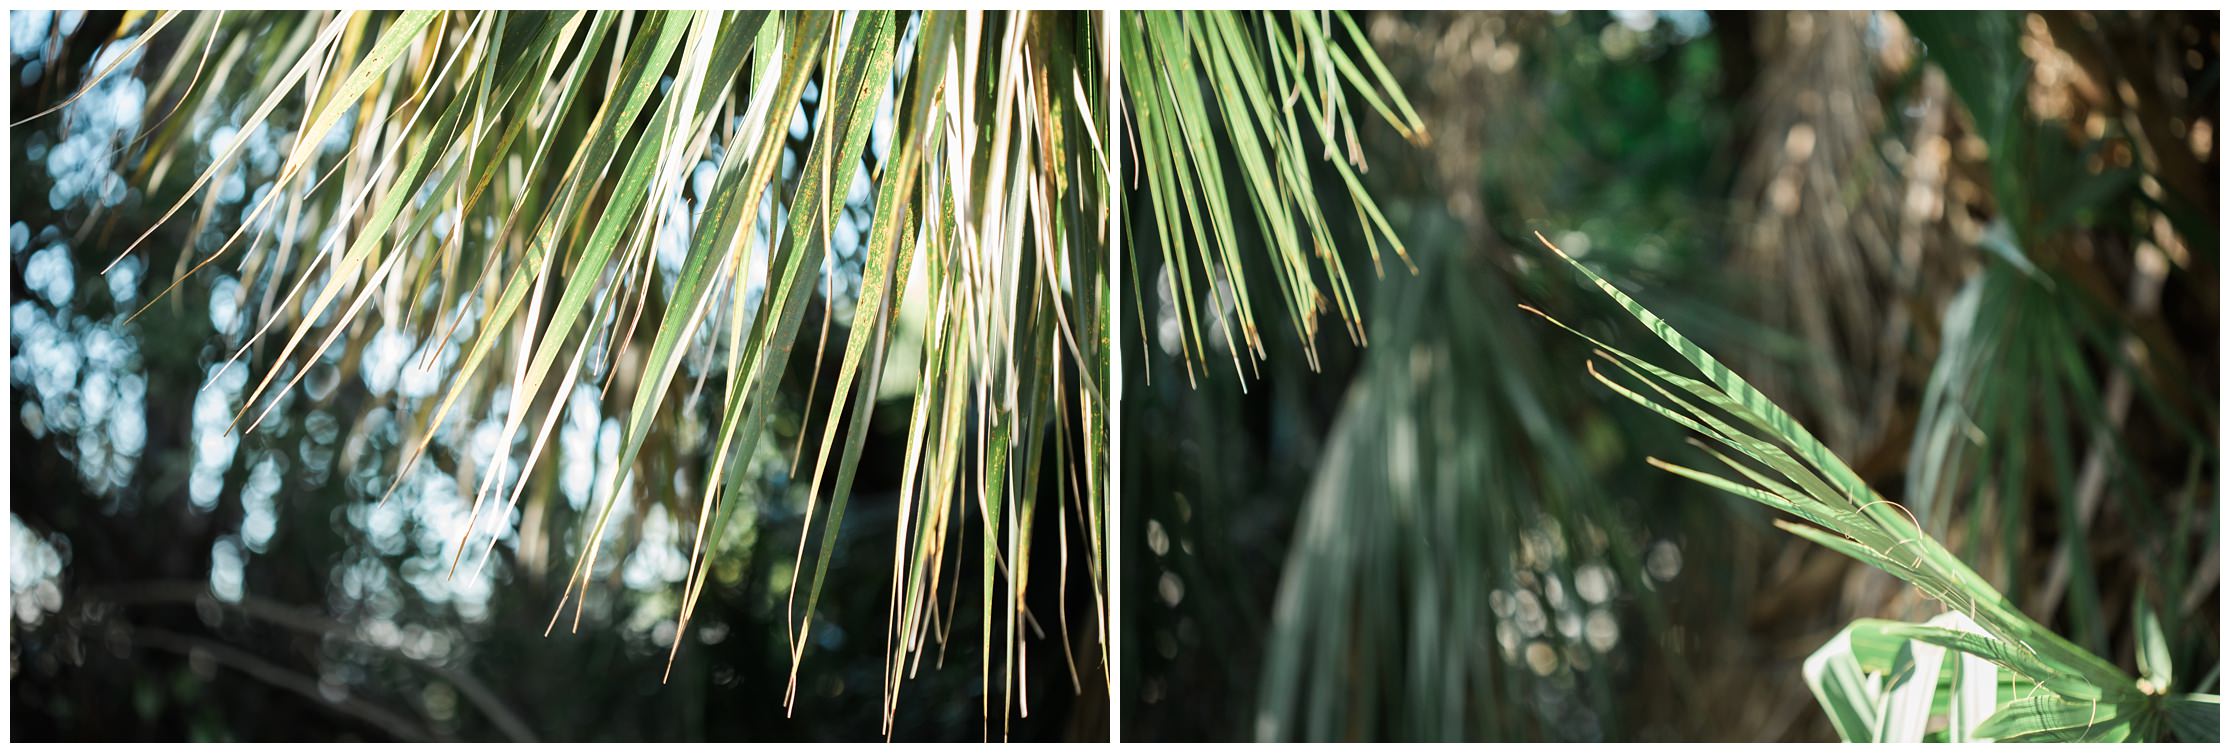 palm, palm fronds, palm trees, green palm, fauna, florida, dlorida details, florida photography, florida photographer